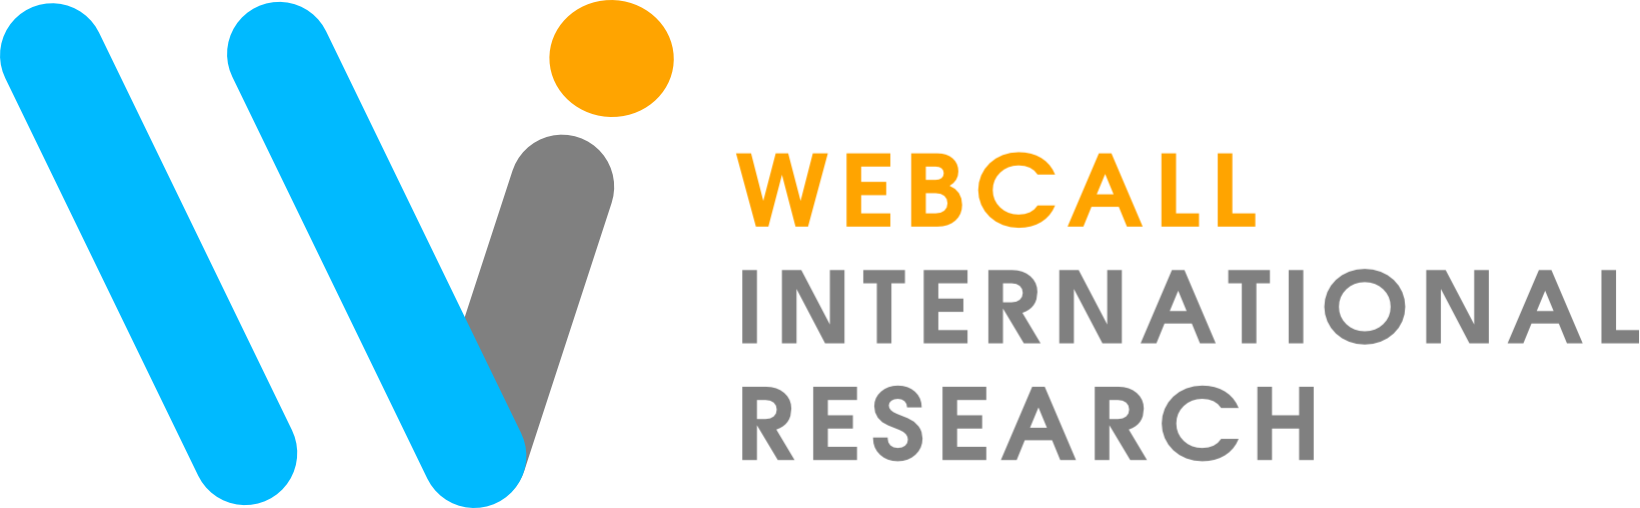 Webcall International Research